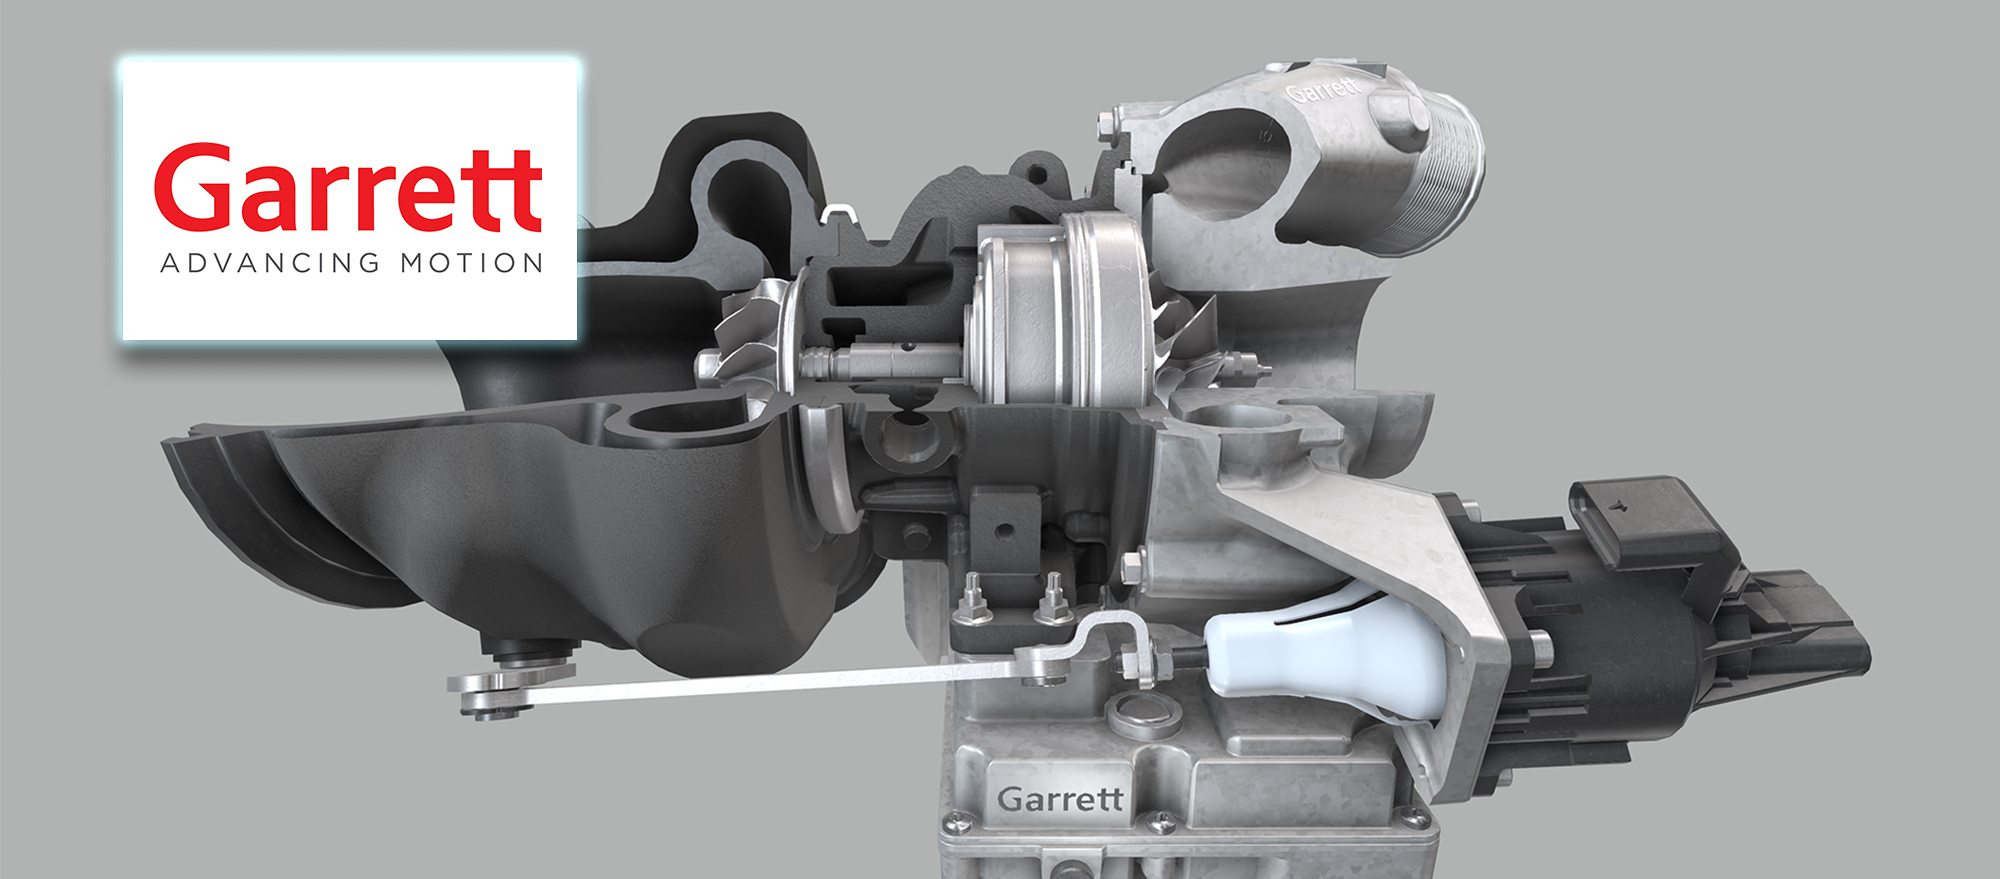 E-turbo for hybrid powertrains